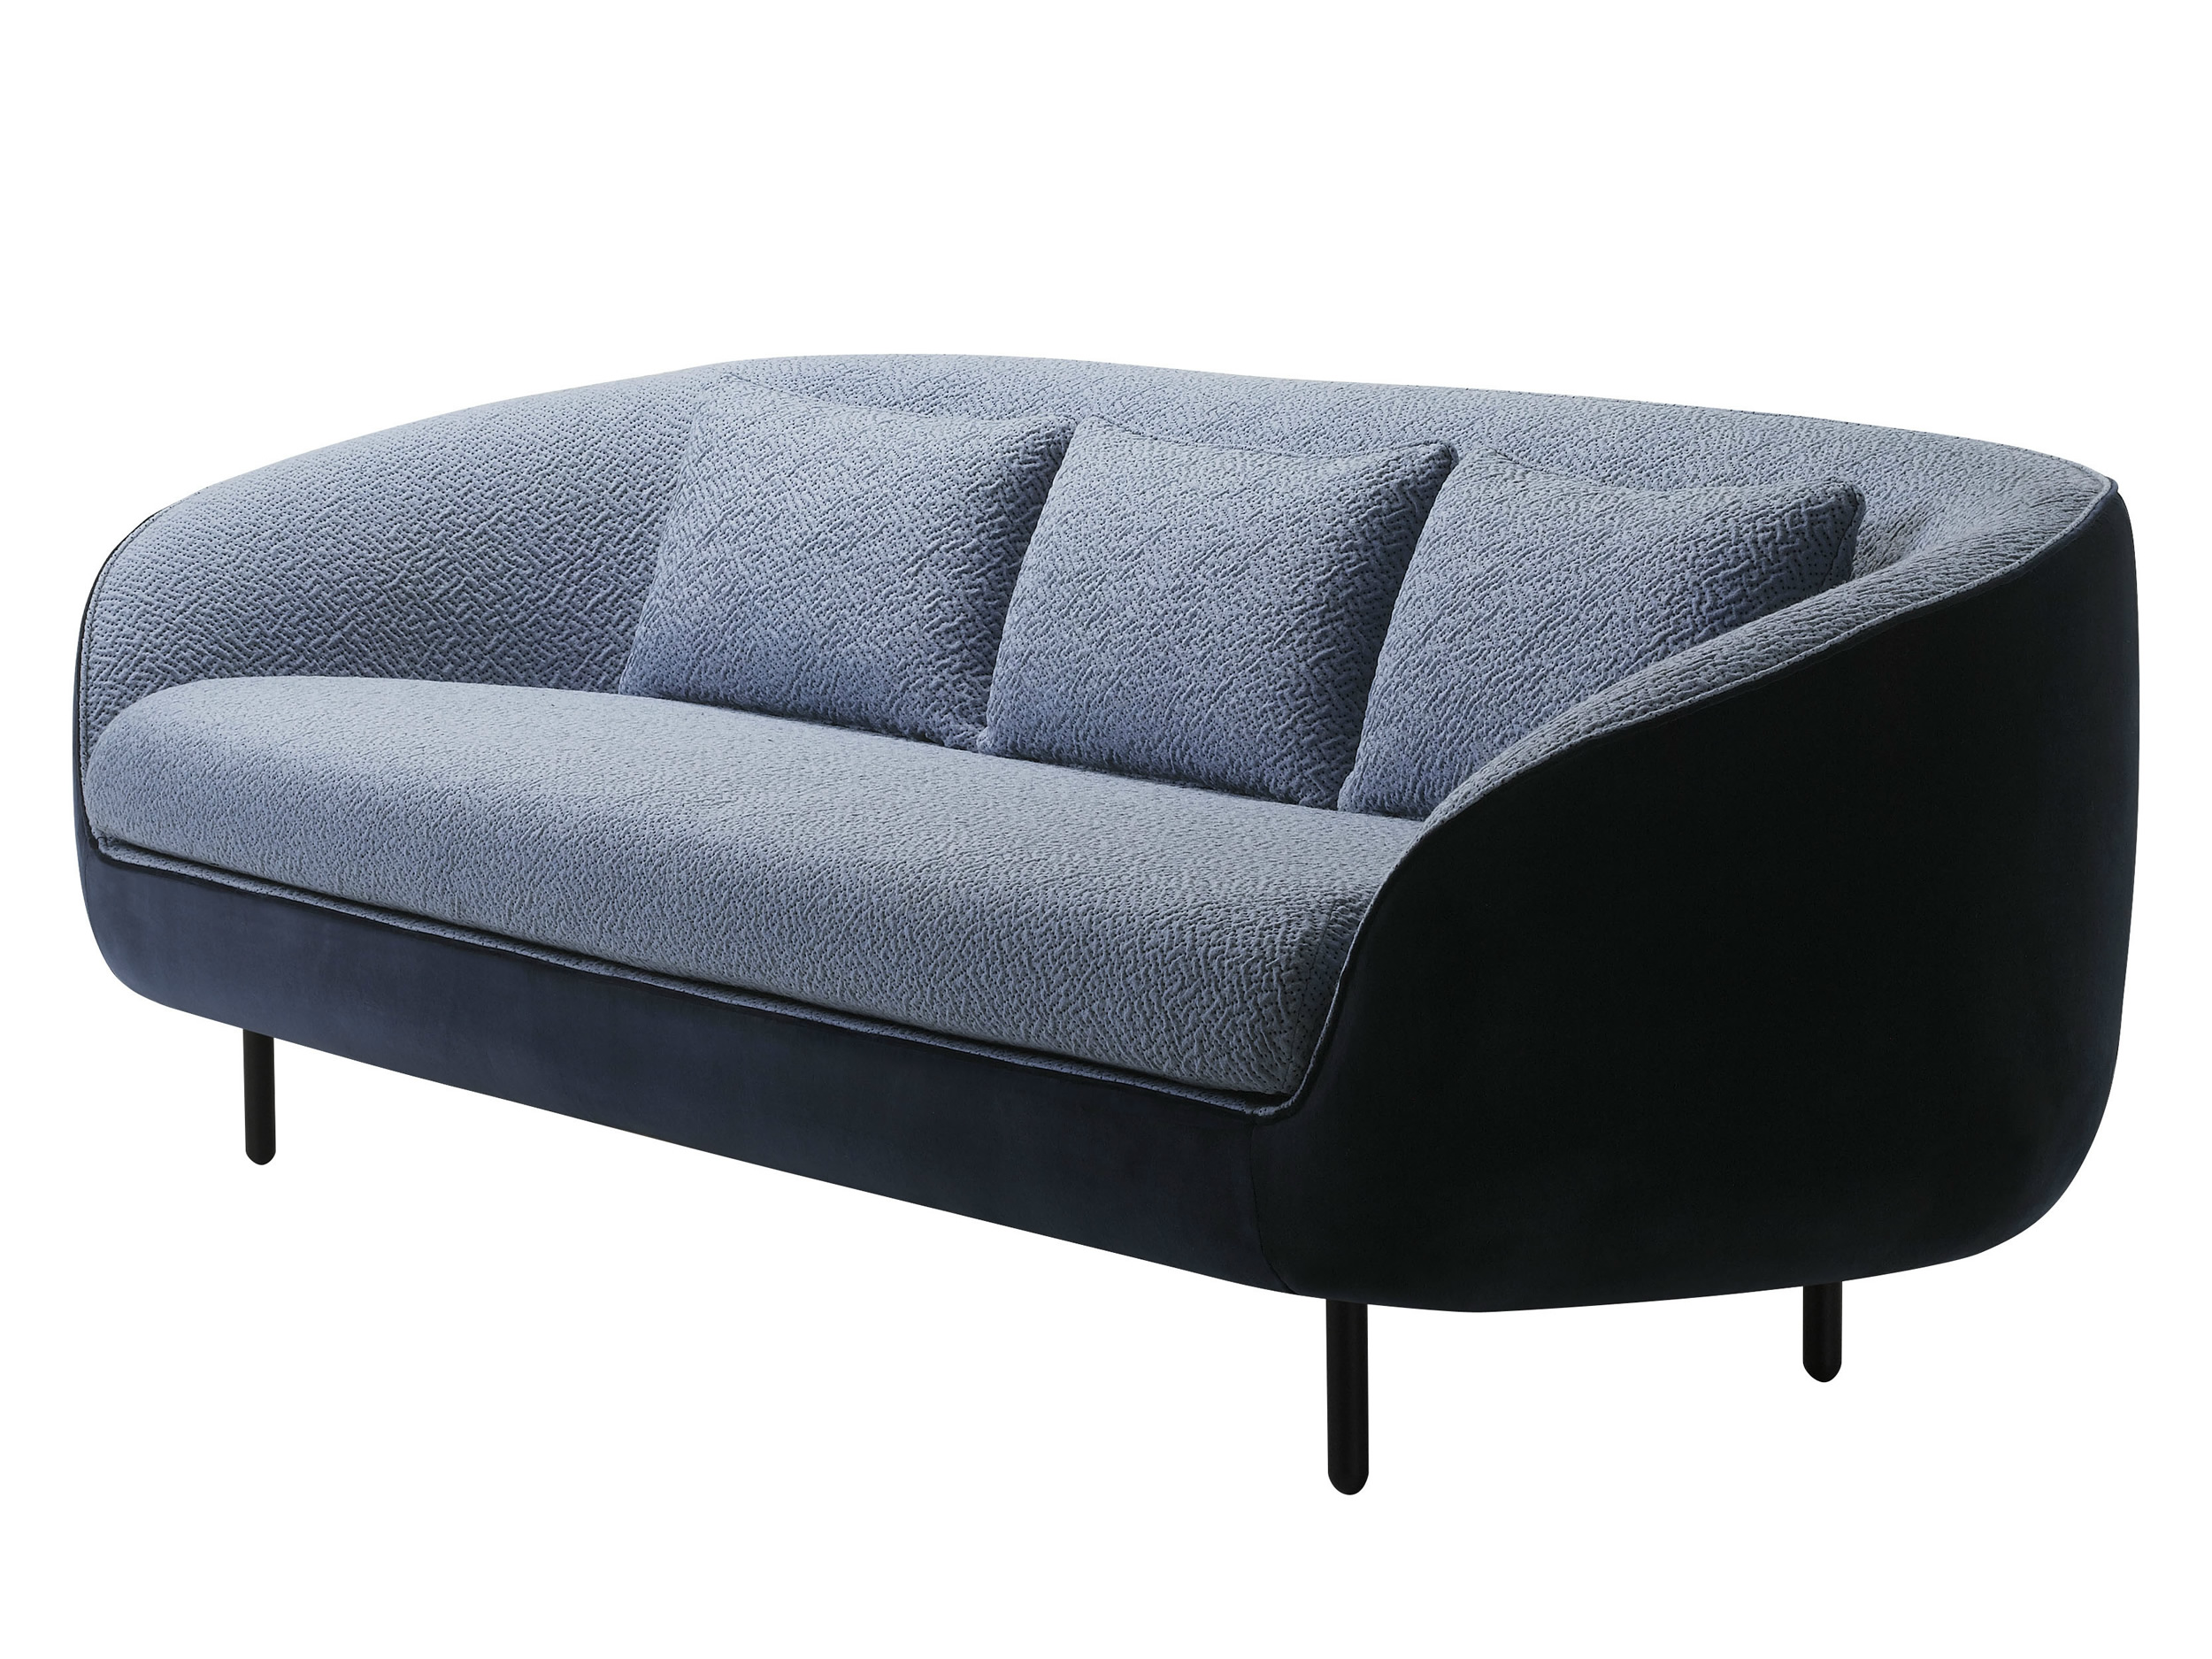 Haiku Low Sofa by GamFratesi Design for Fredericia